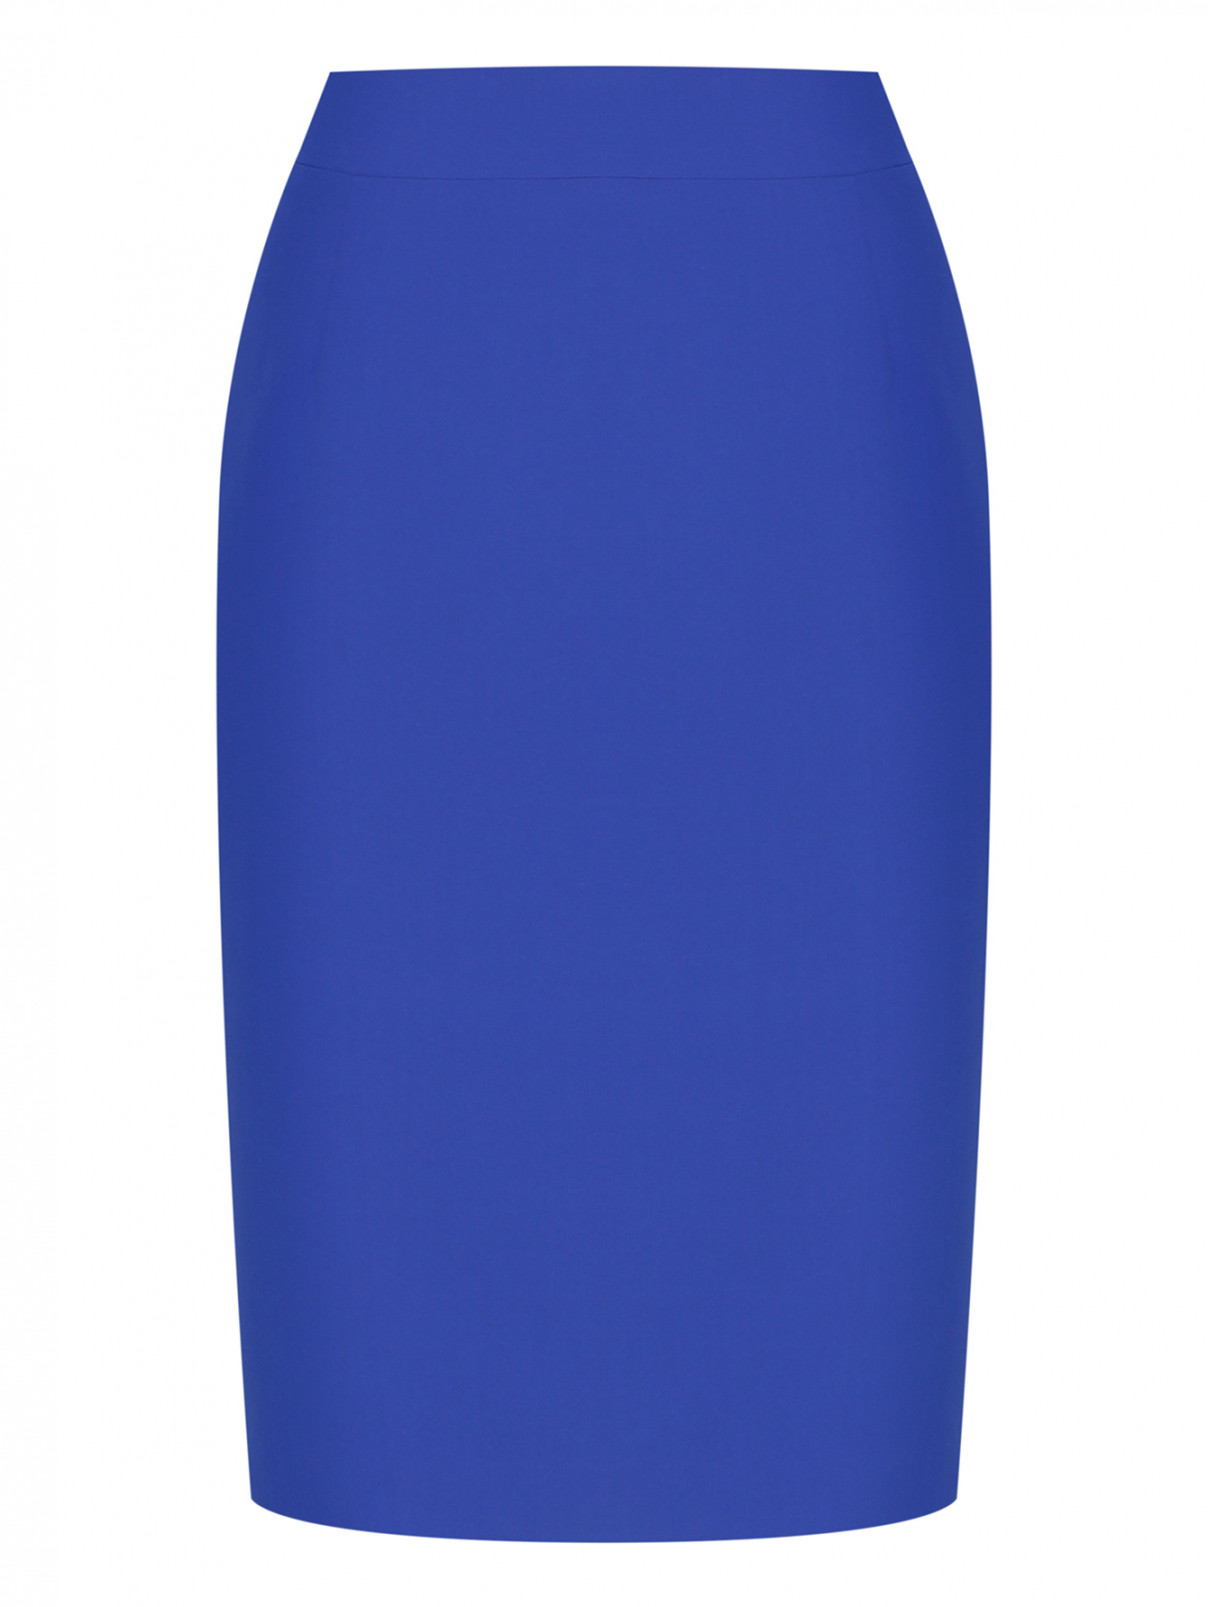 Однотонная юбка-карандаш Moschino  –  Общий вид  – Цвет:  Синий